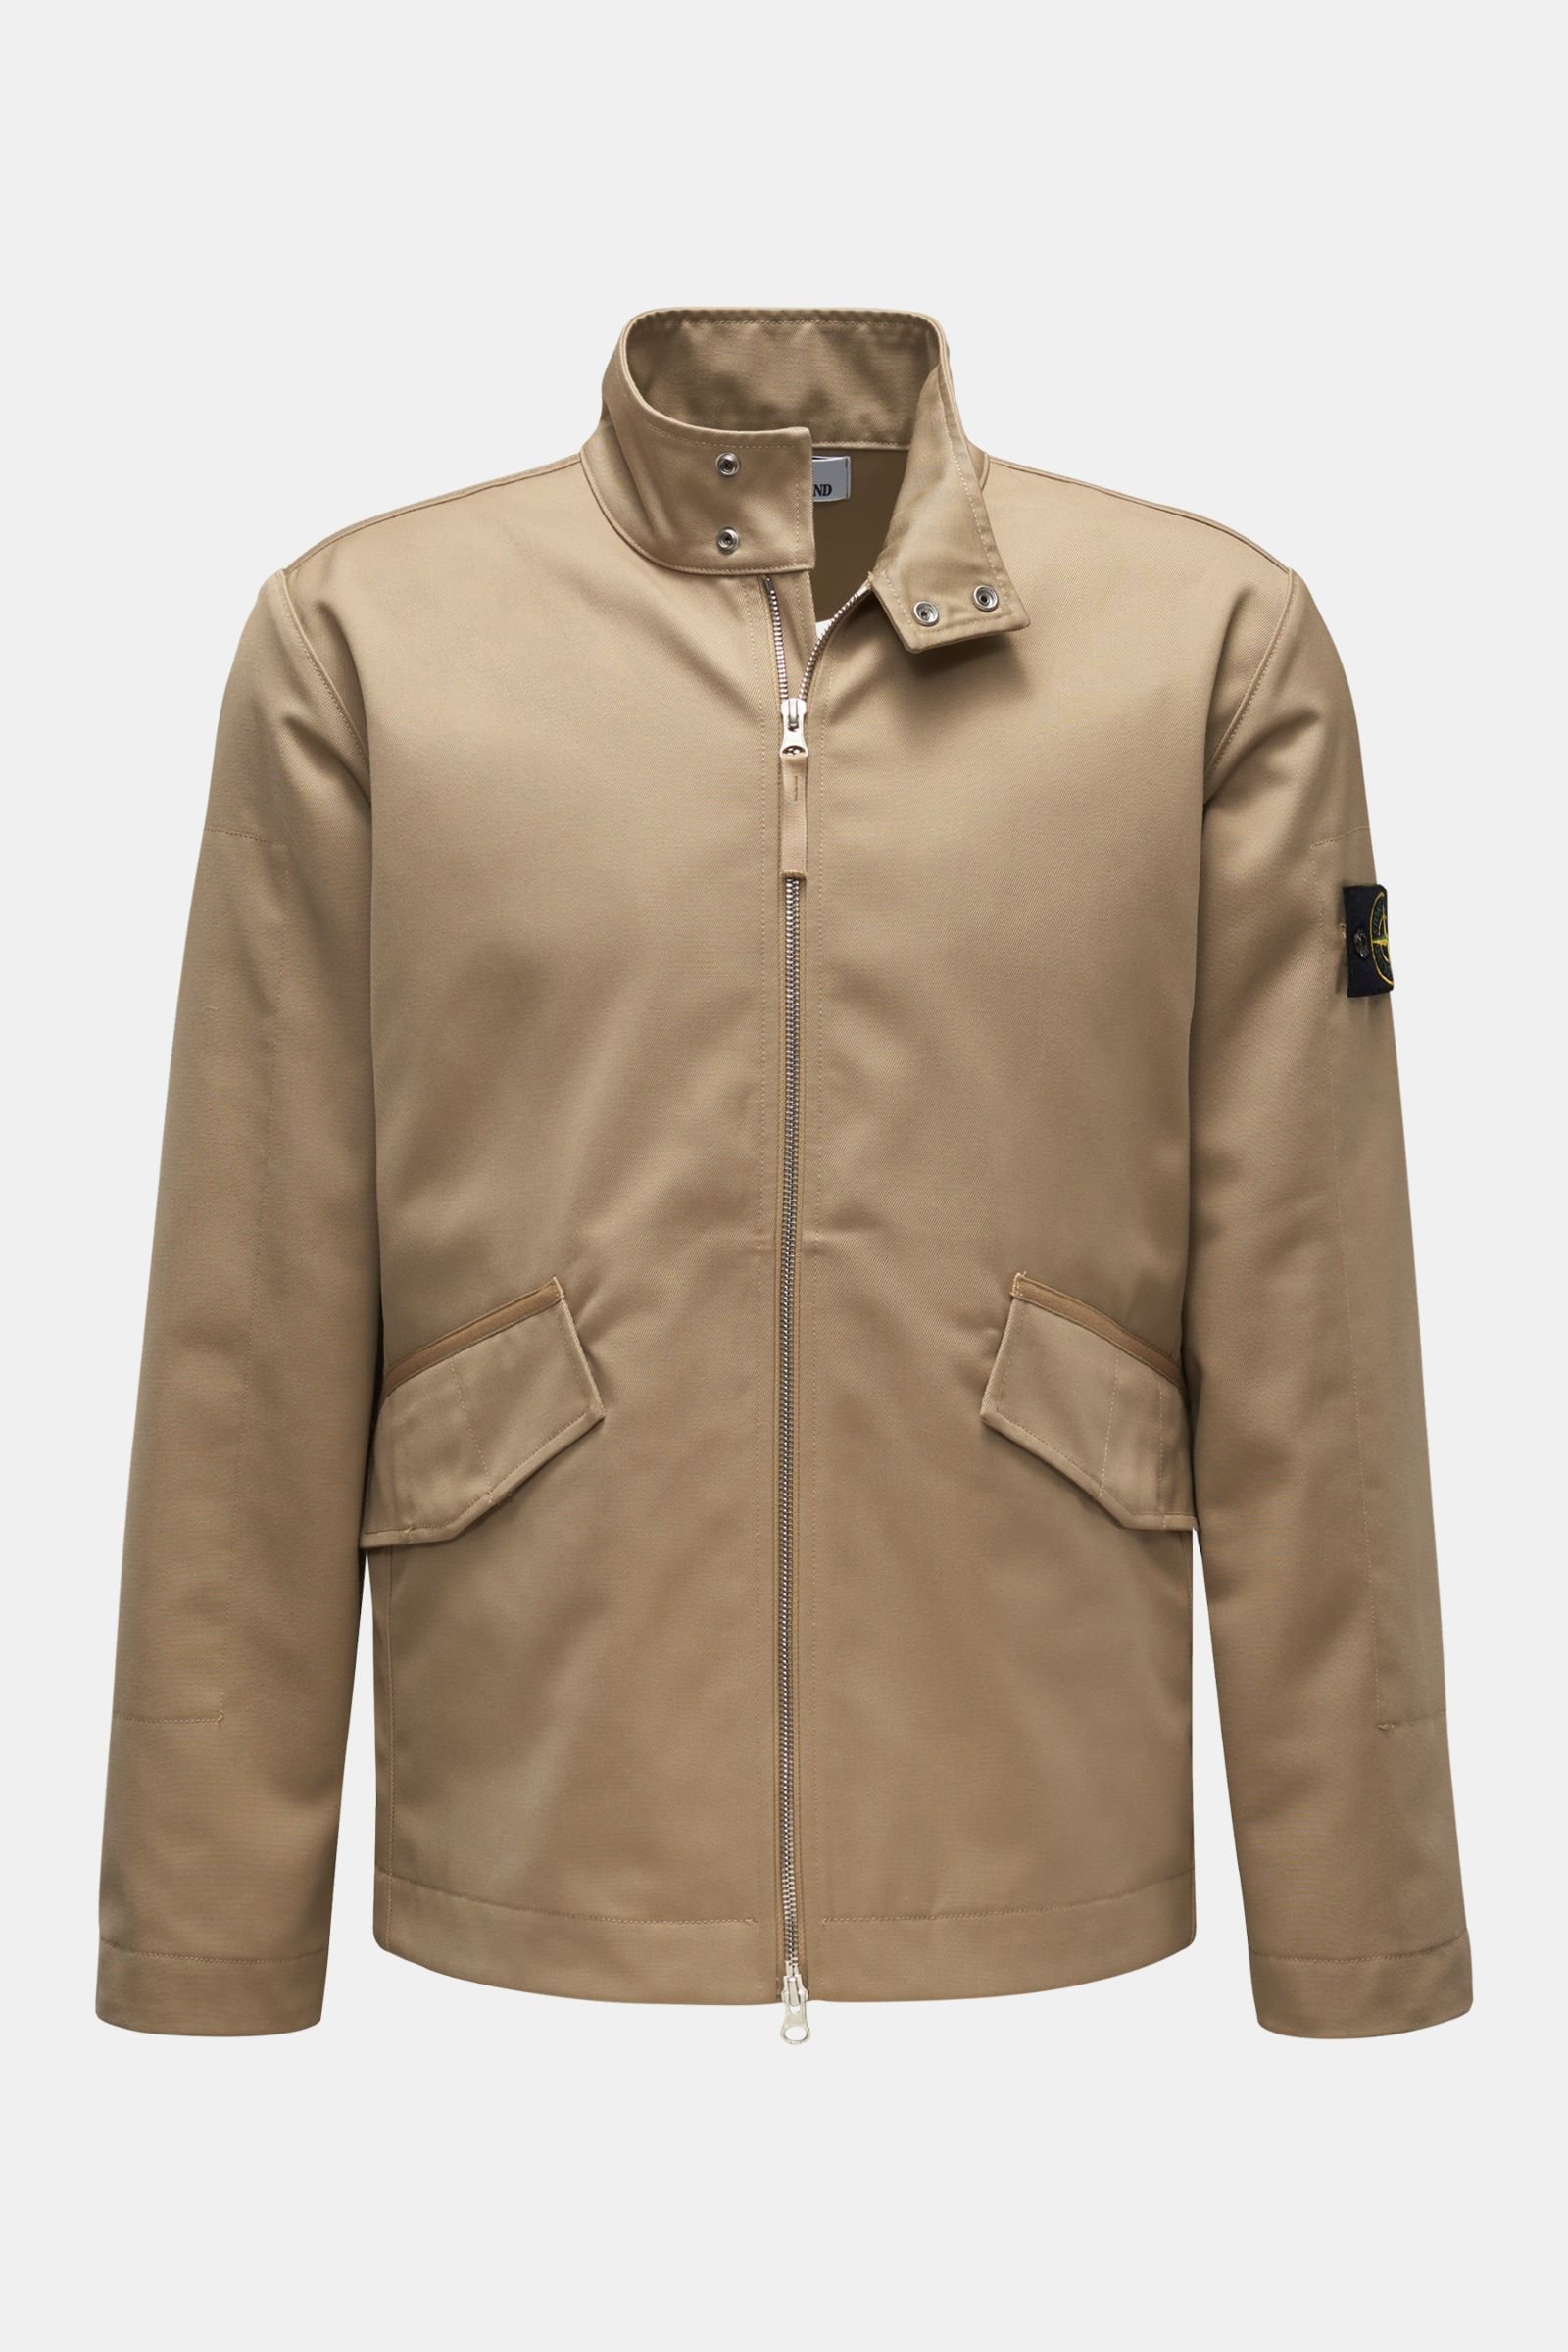 STONE ISLAND jacket 'Workwear R-Gabardine 3/1' light brown | BRAUN Hamburg